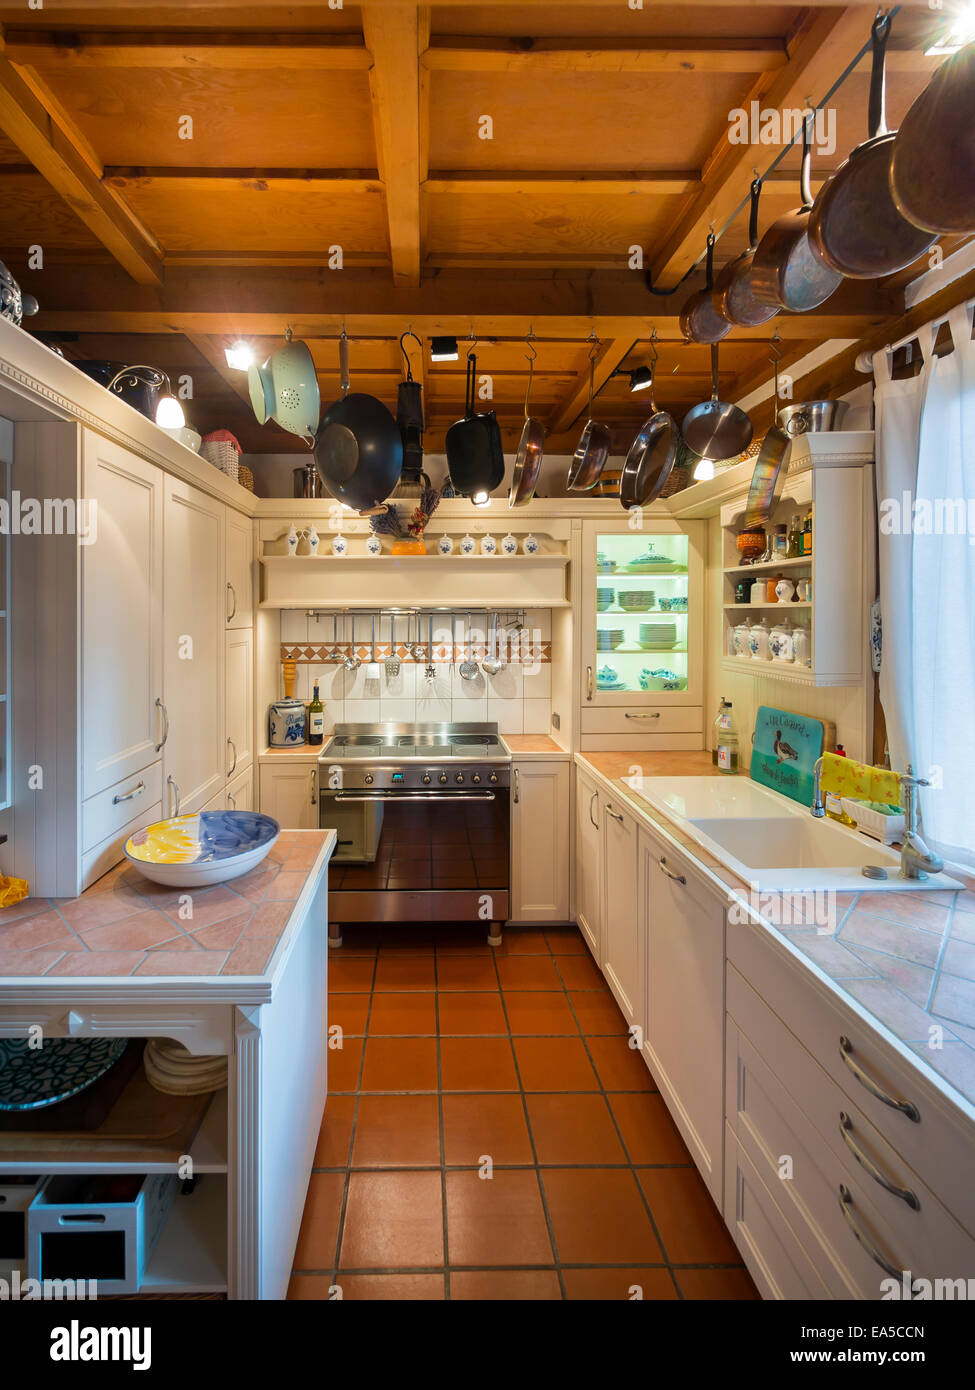 County style kitchen Stock Photo